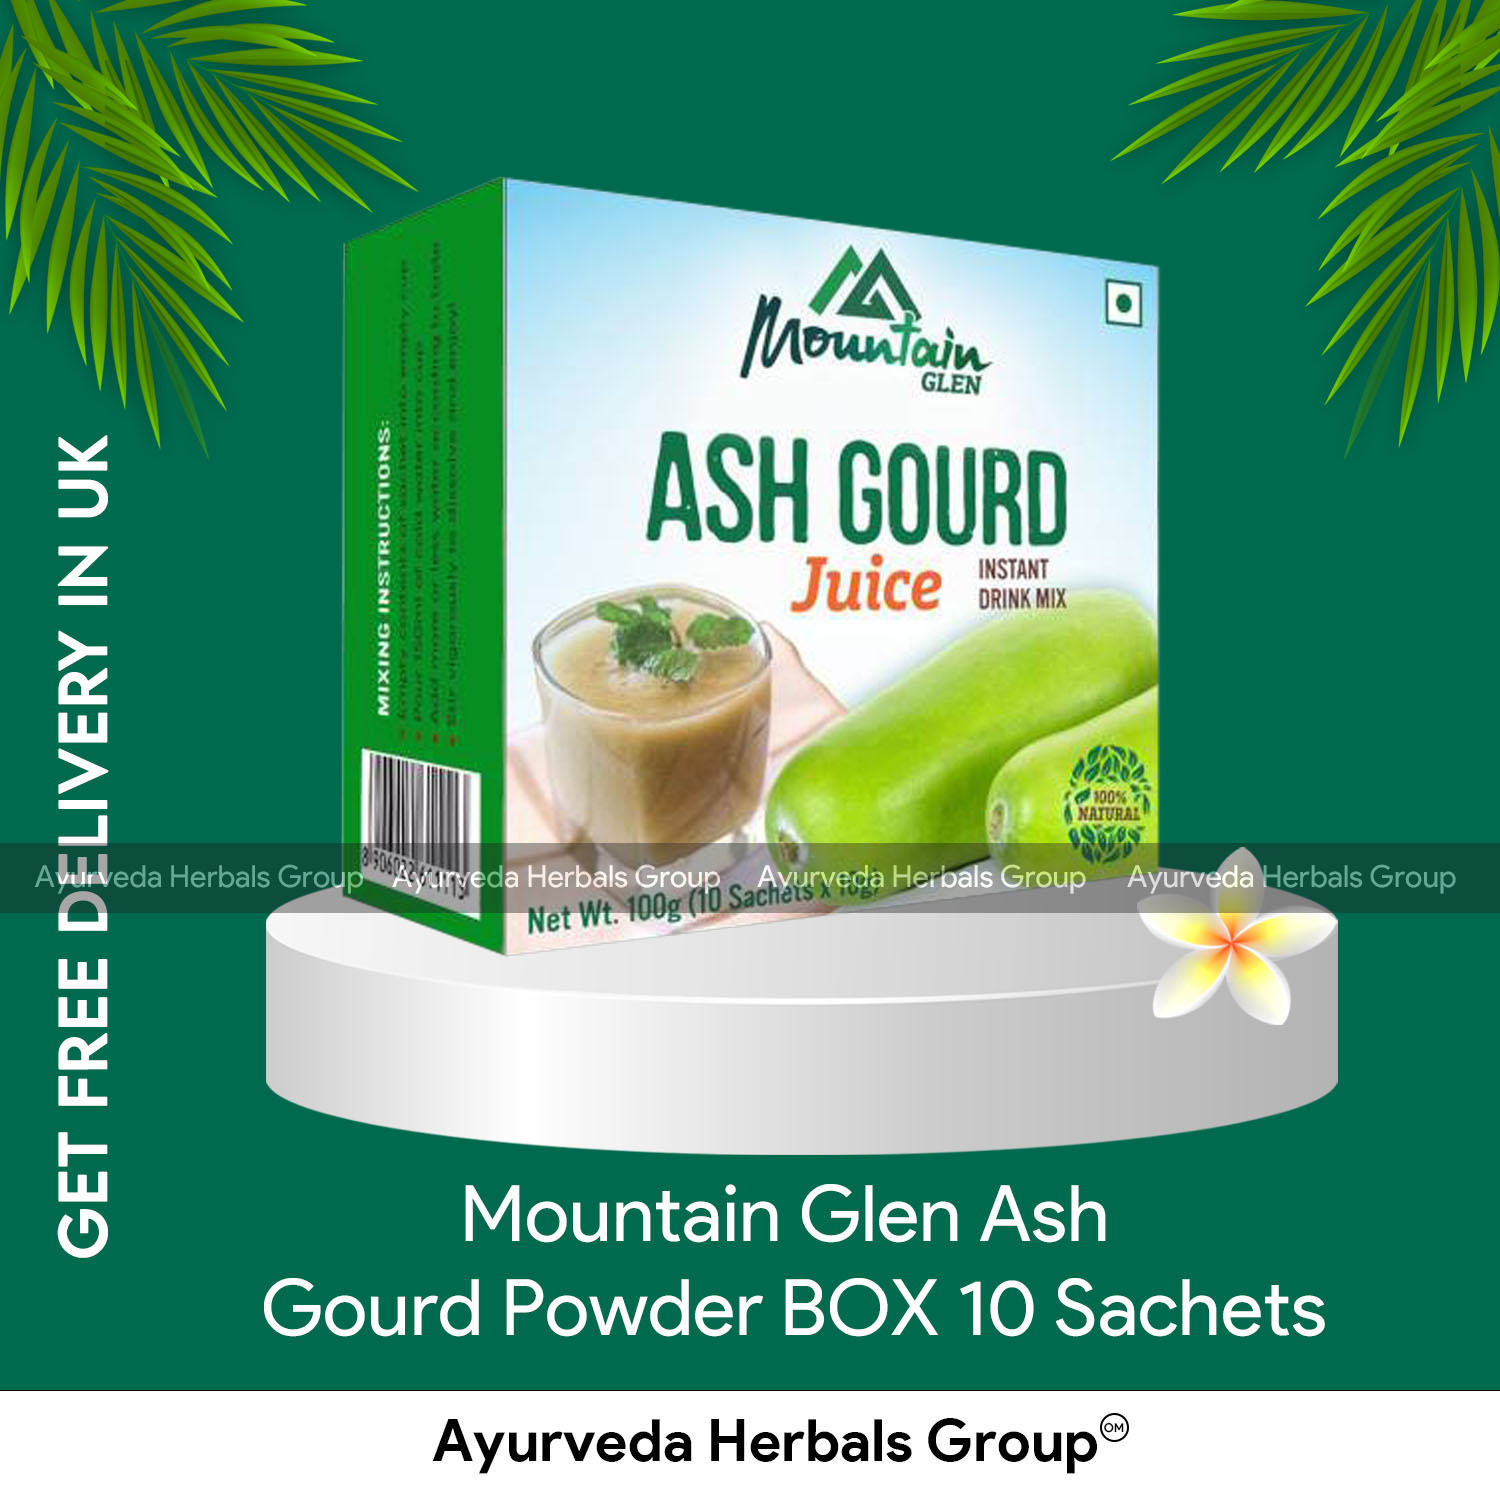 Mountain Glen Ash Gourd Powder BOX 10 Sachets - SUPER FOOD